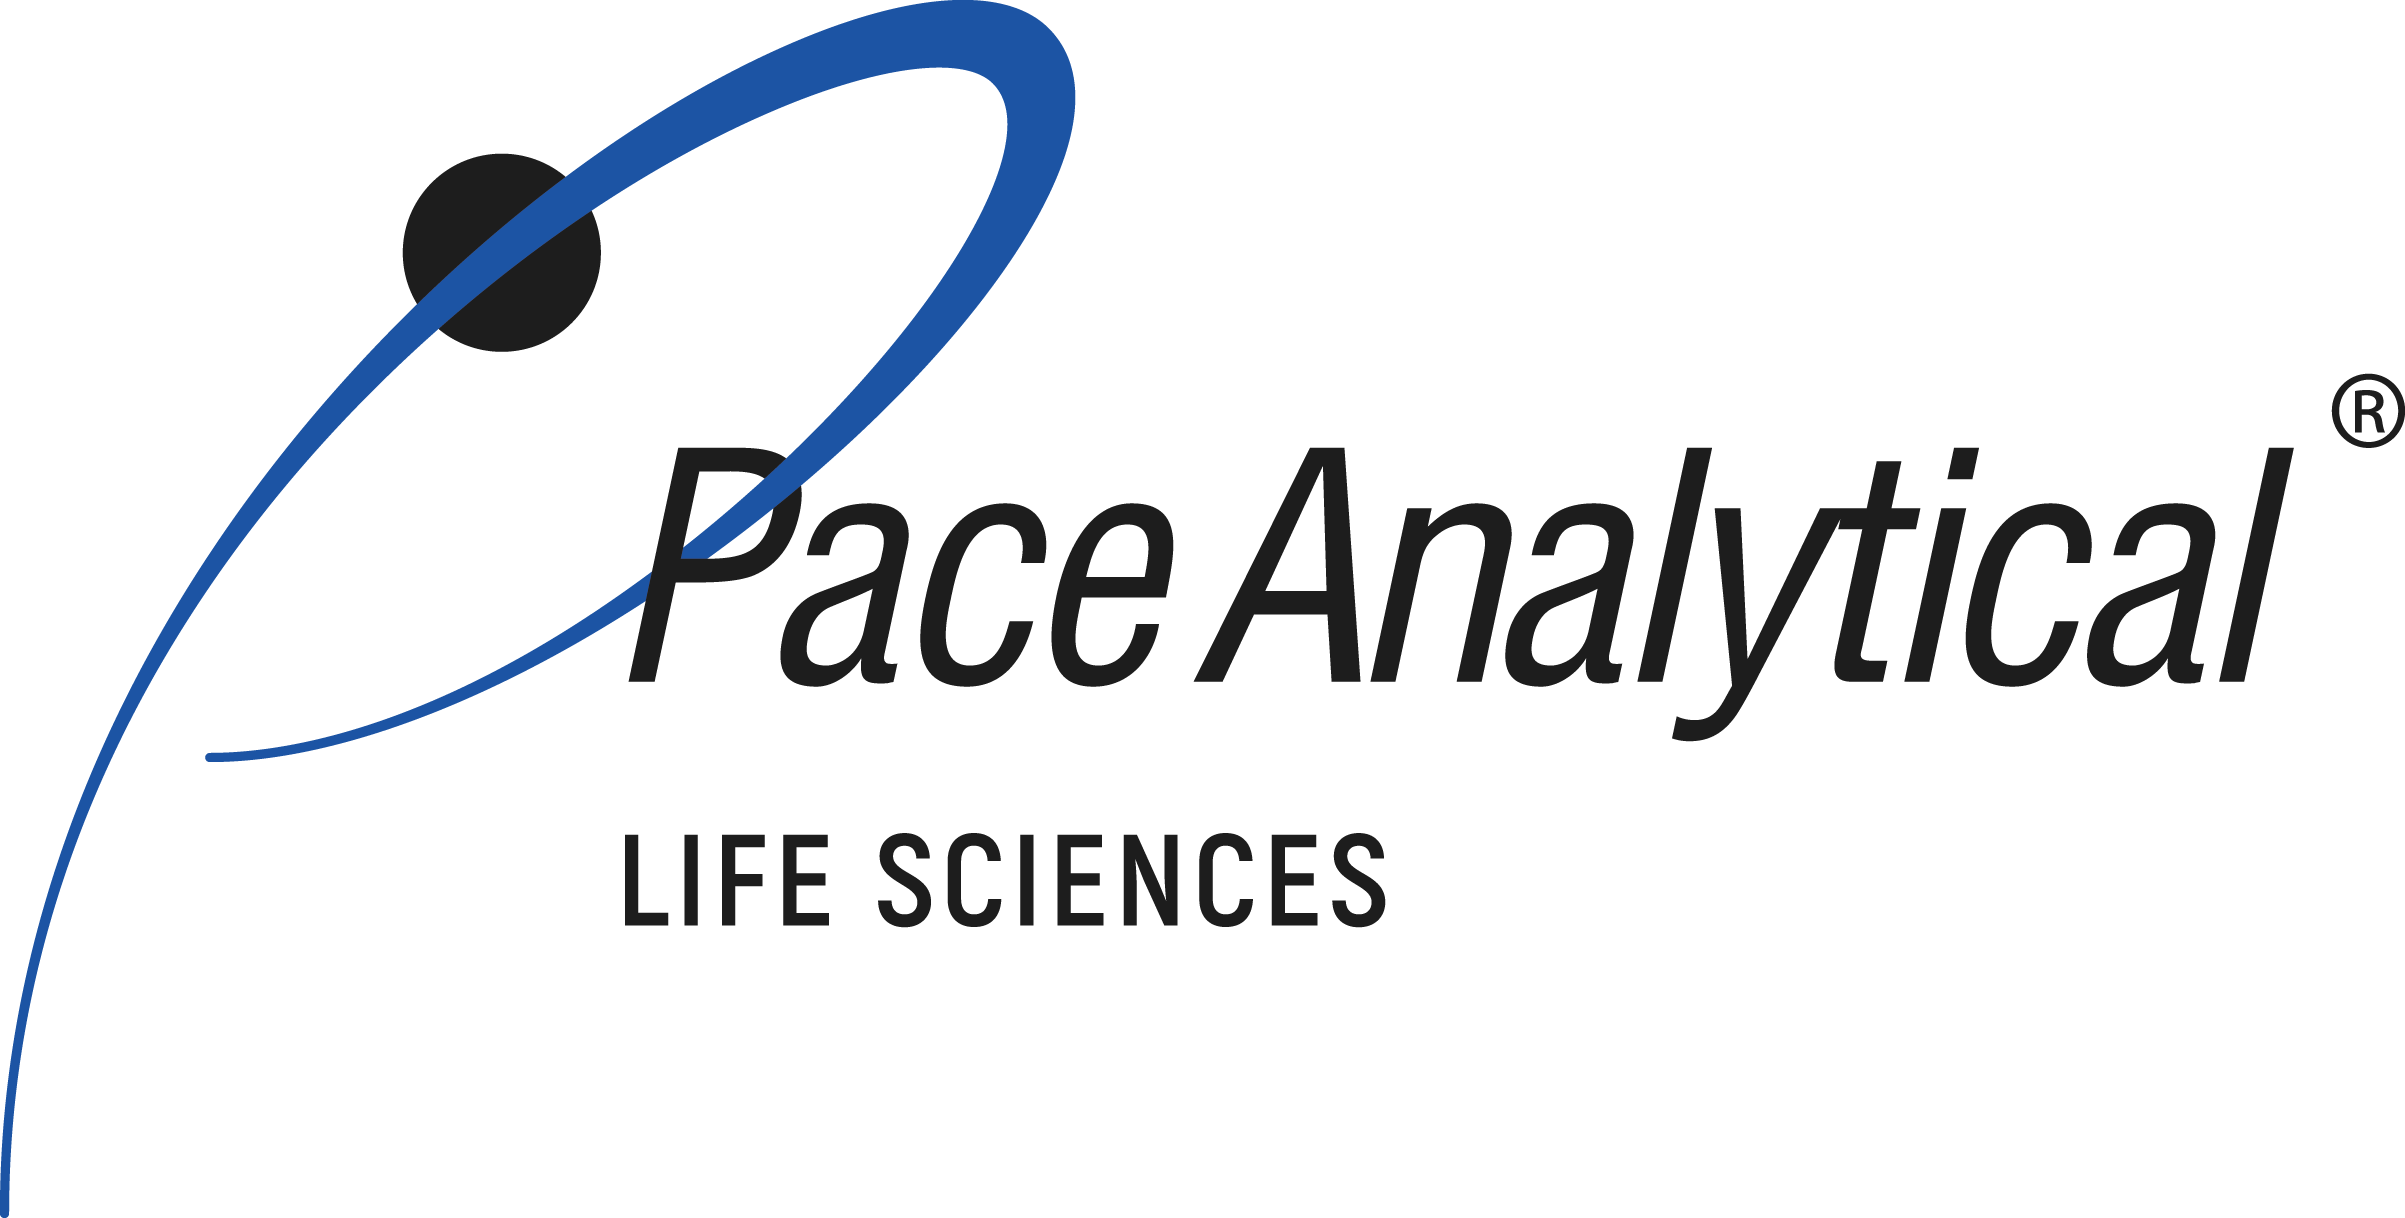 Pace Life Sciences, LLC